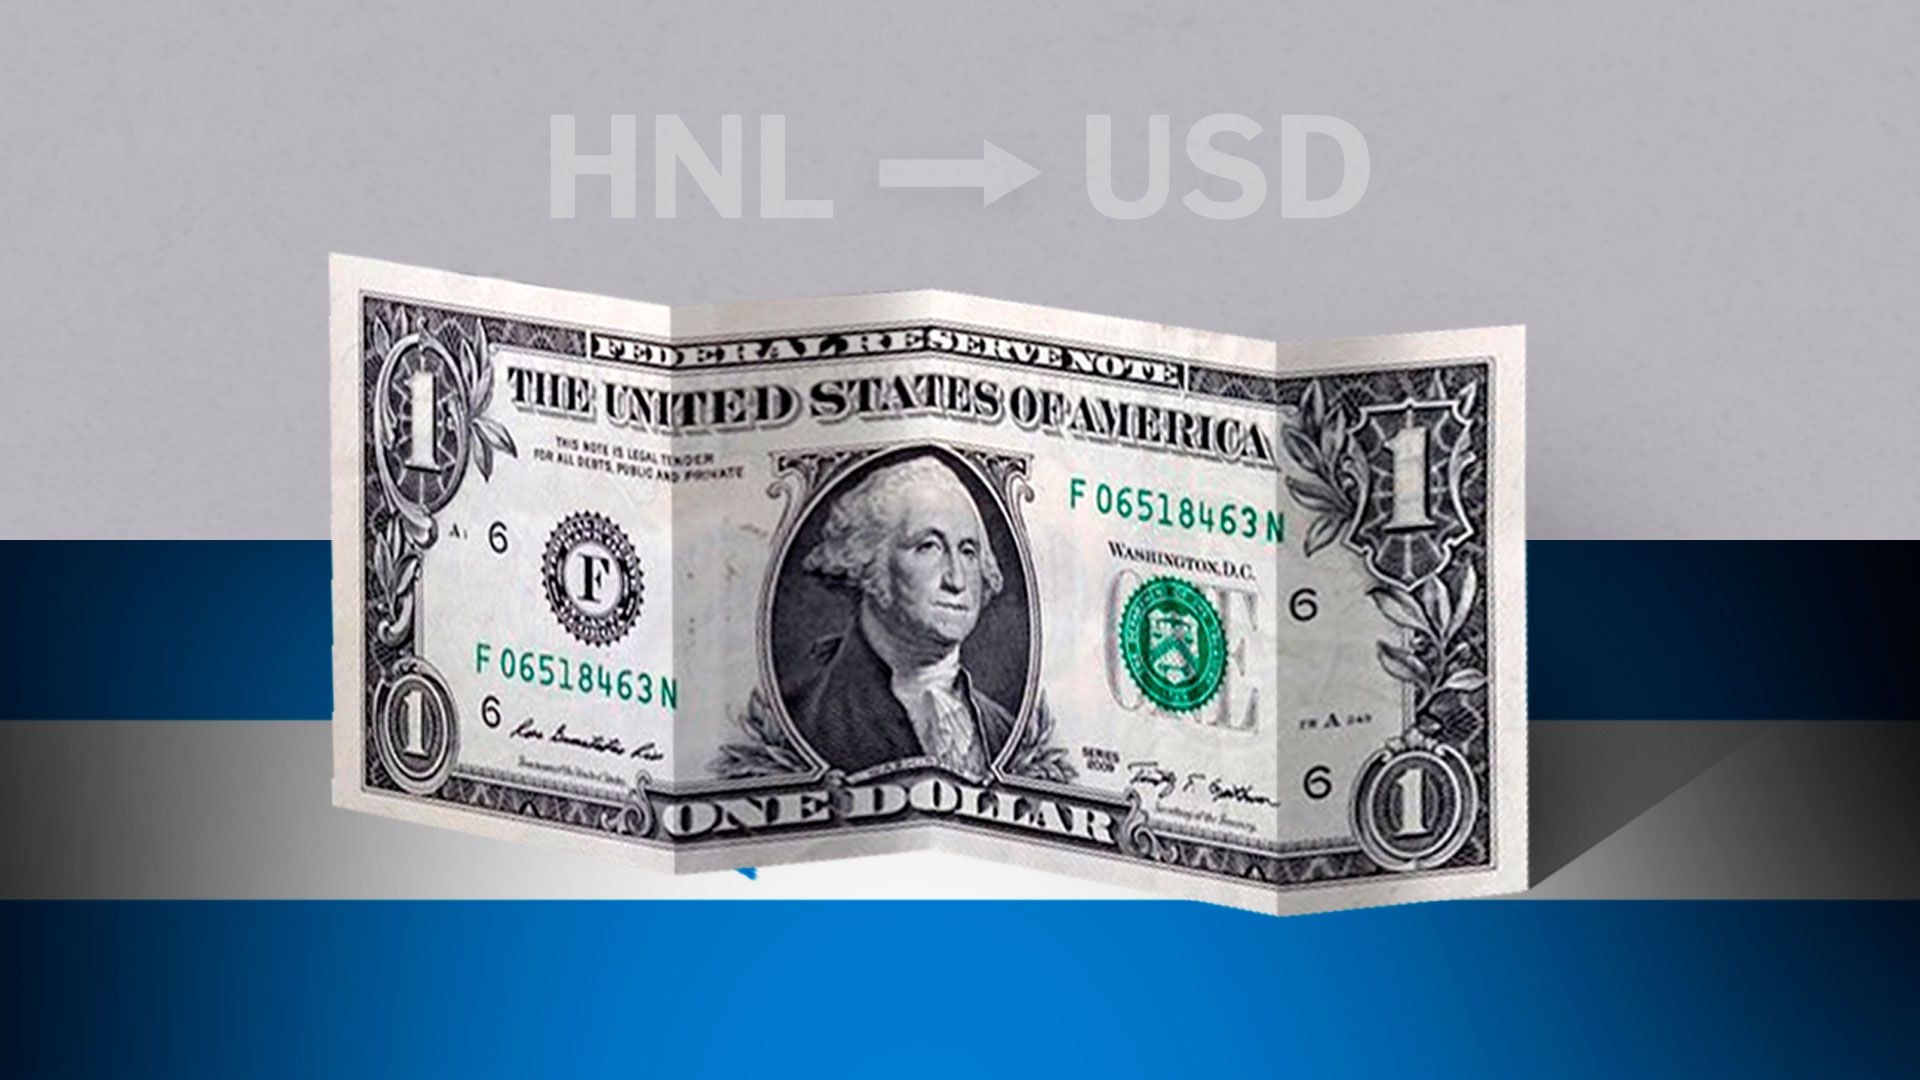 USD/HNL se usa para distinguir la cotización dólar sobre lempira hondureño. (Infobae)